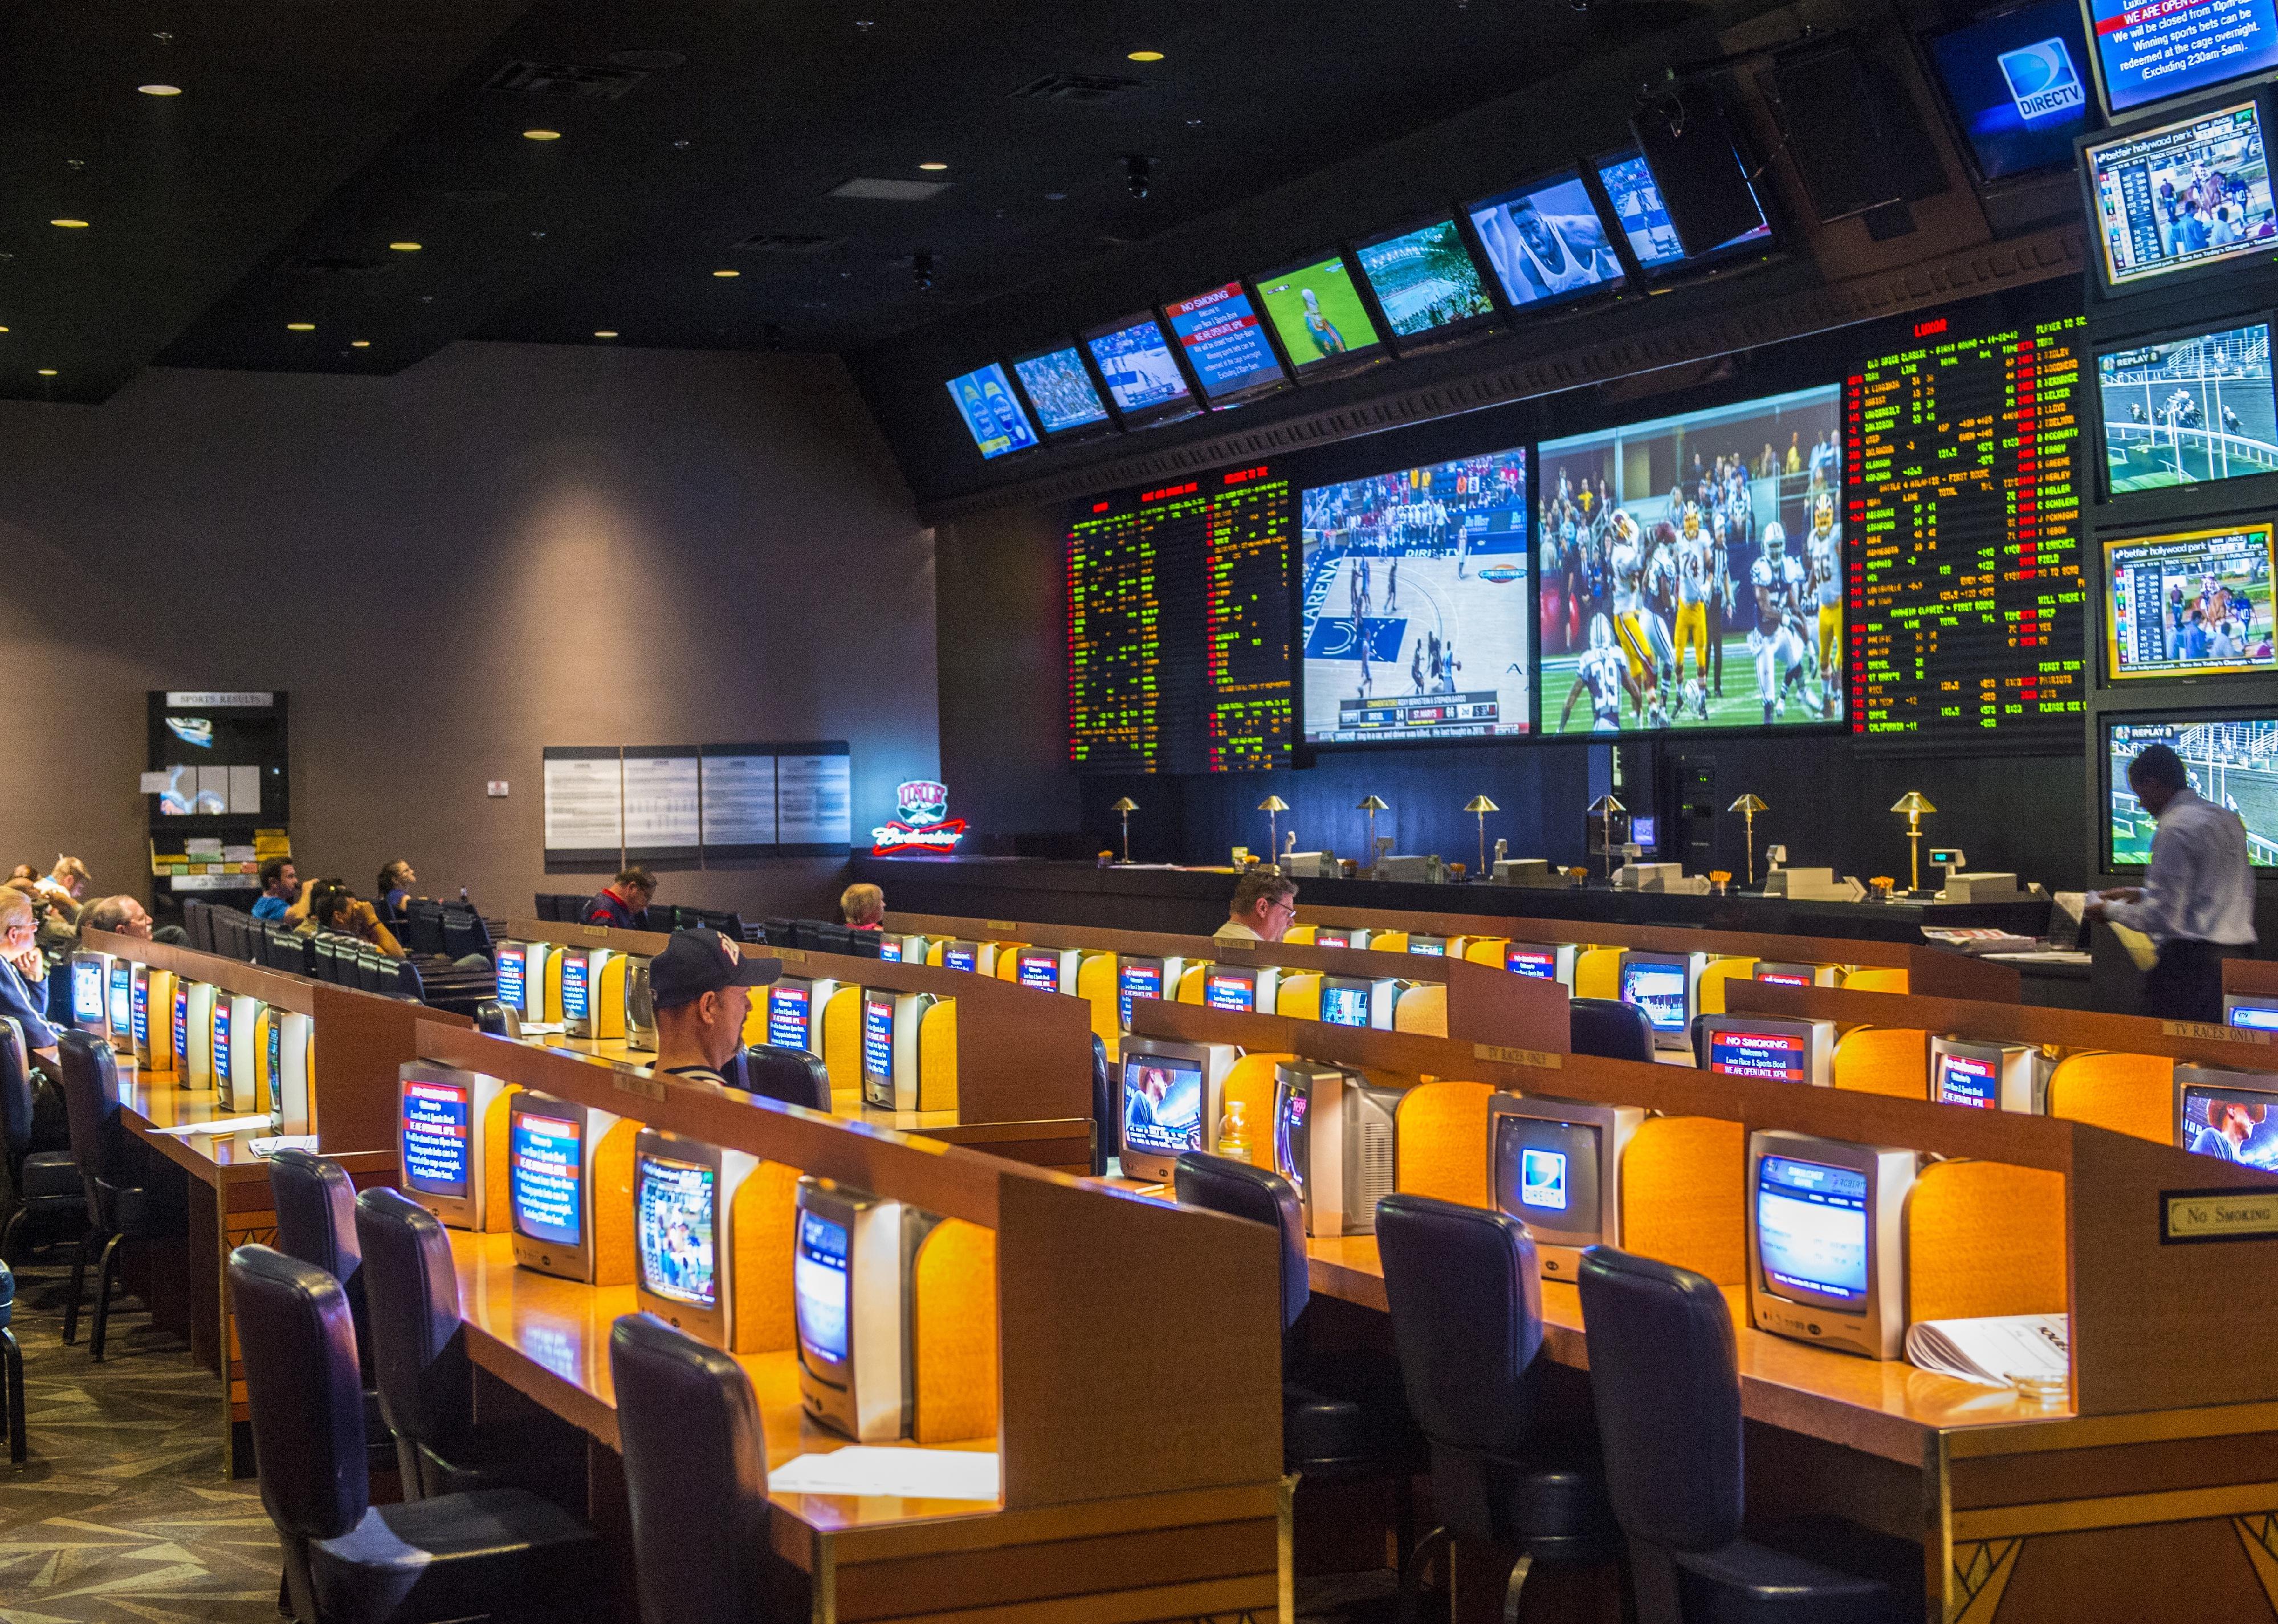 Sport beting at the New York-New York Casino.